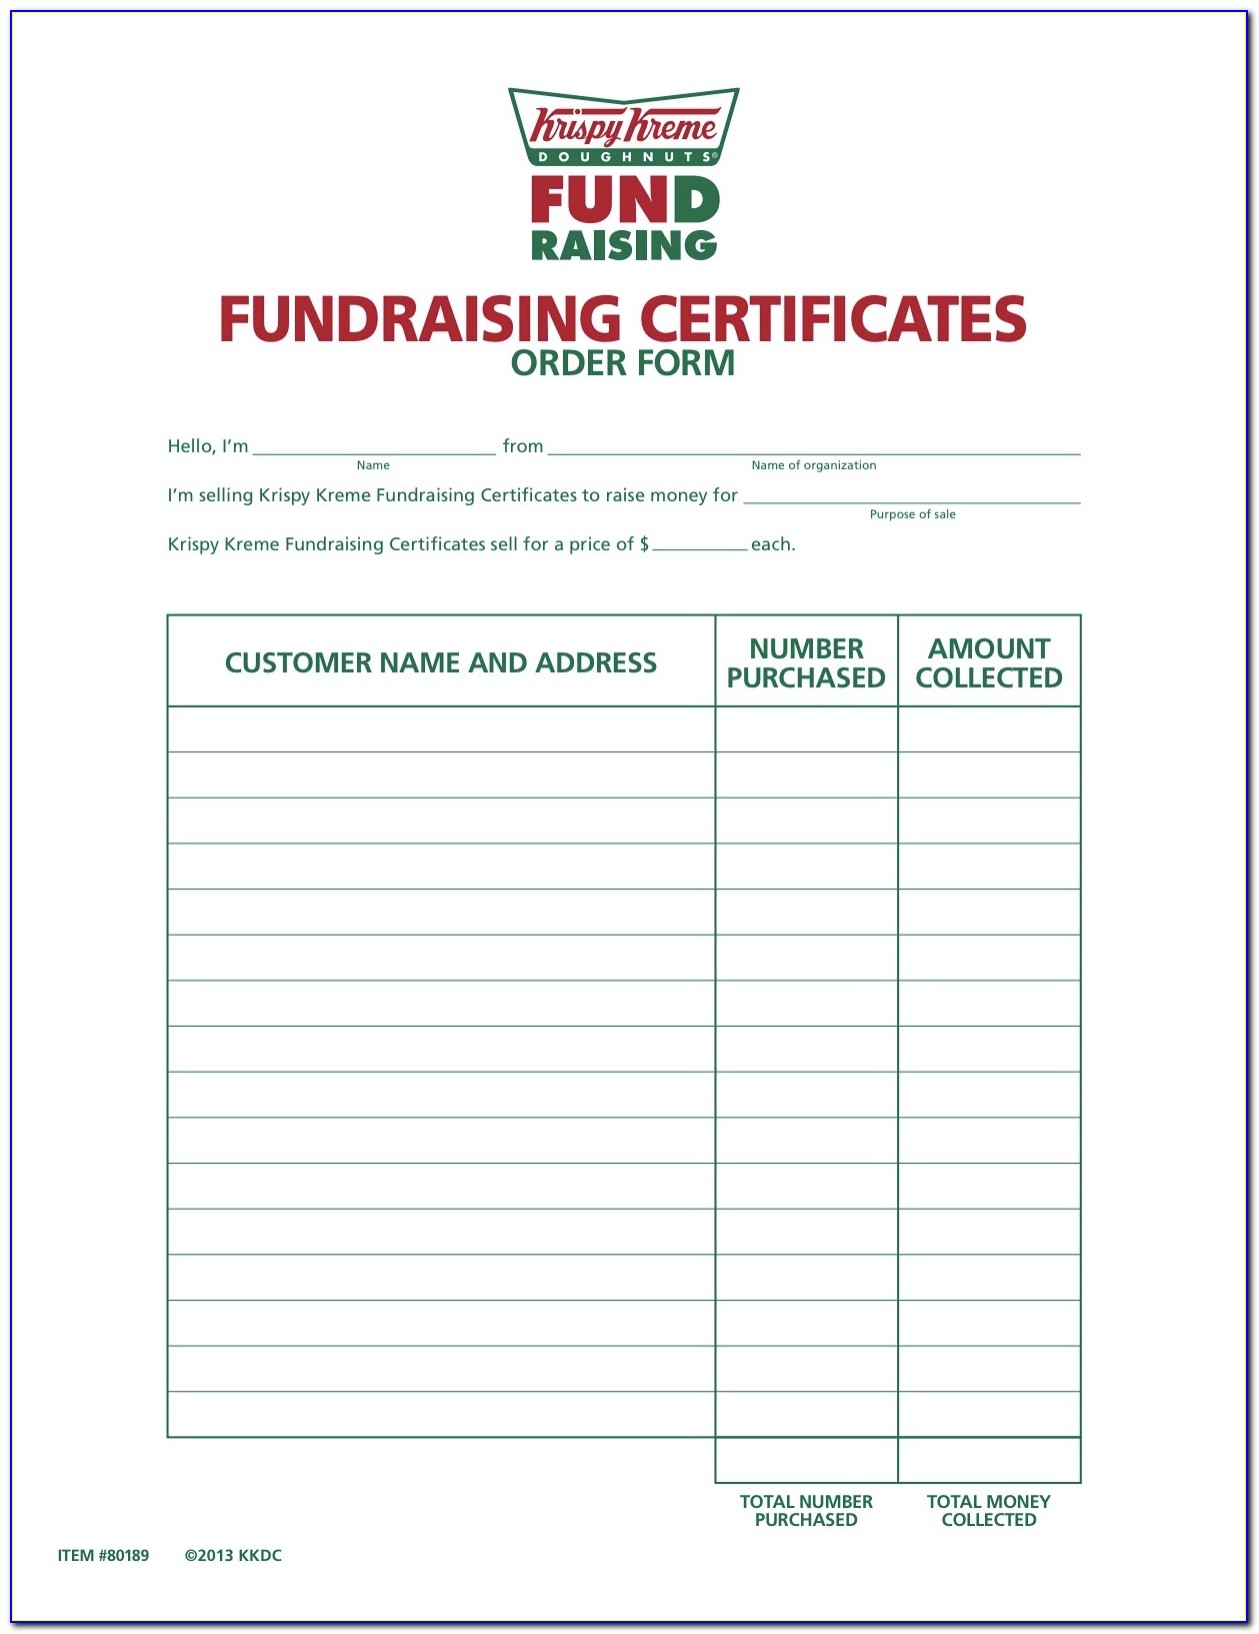 Krispy Kreme Fundraising Certificates Order Form